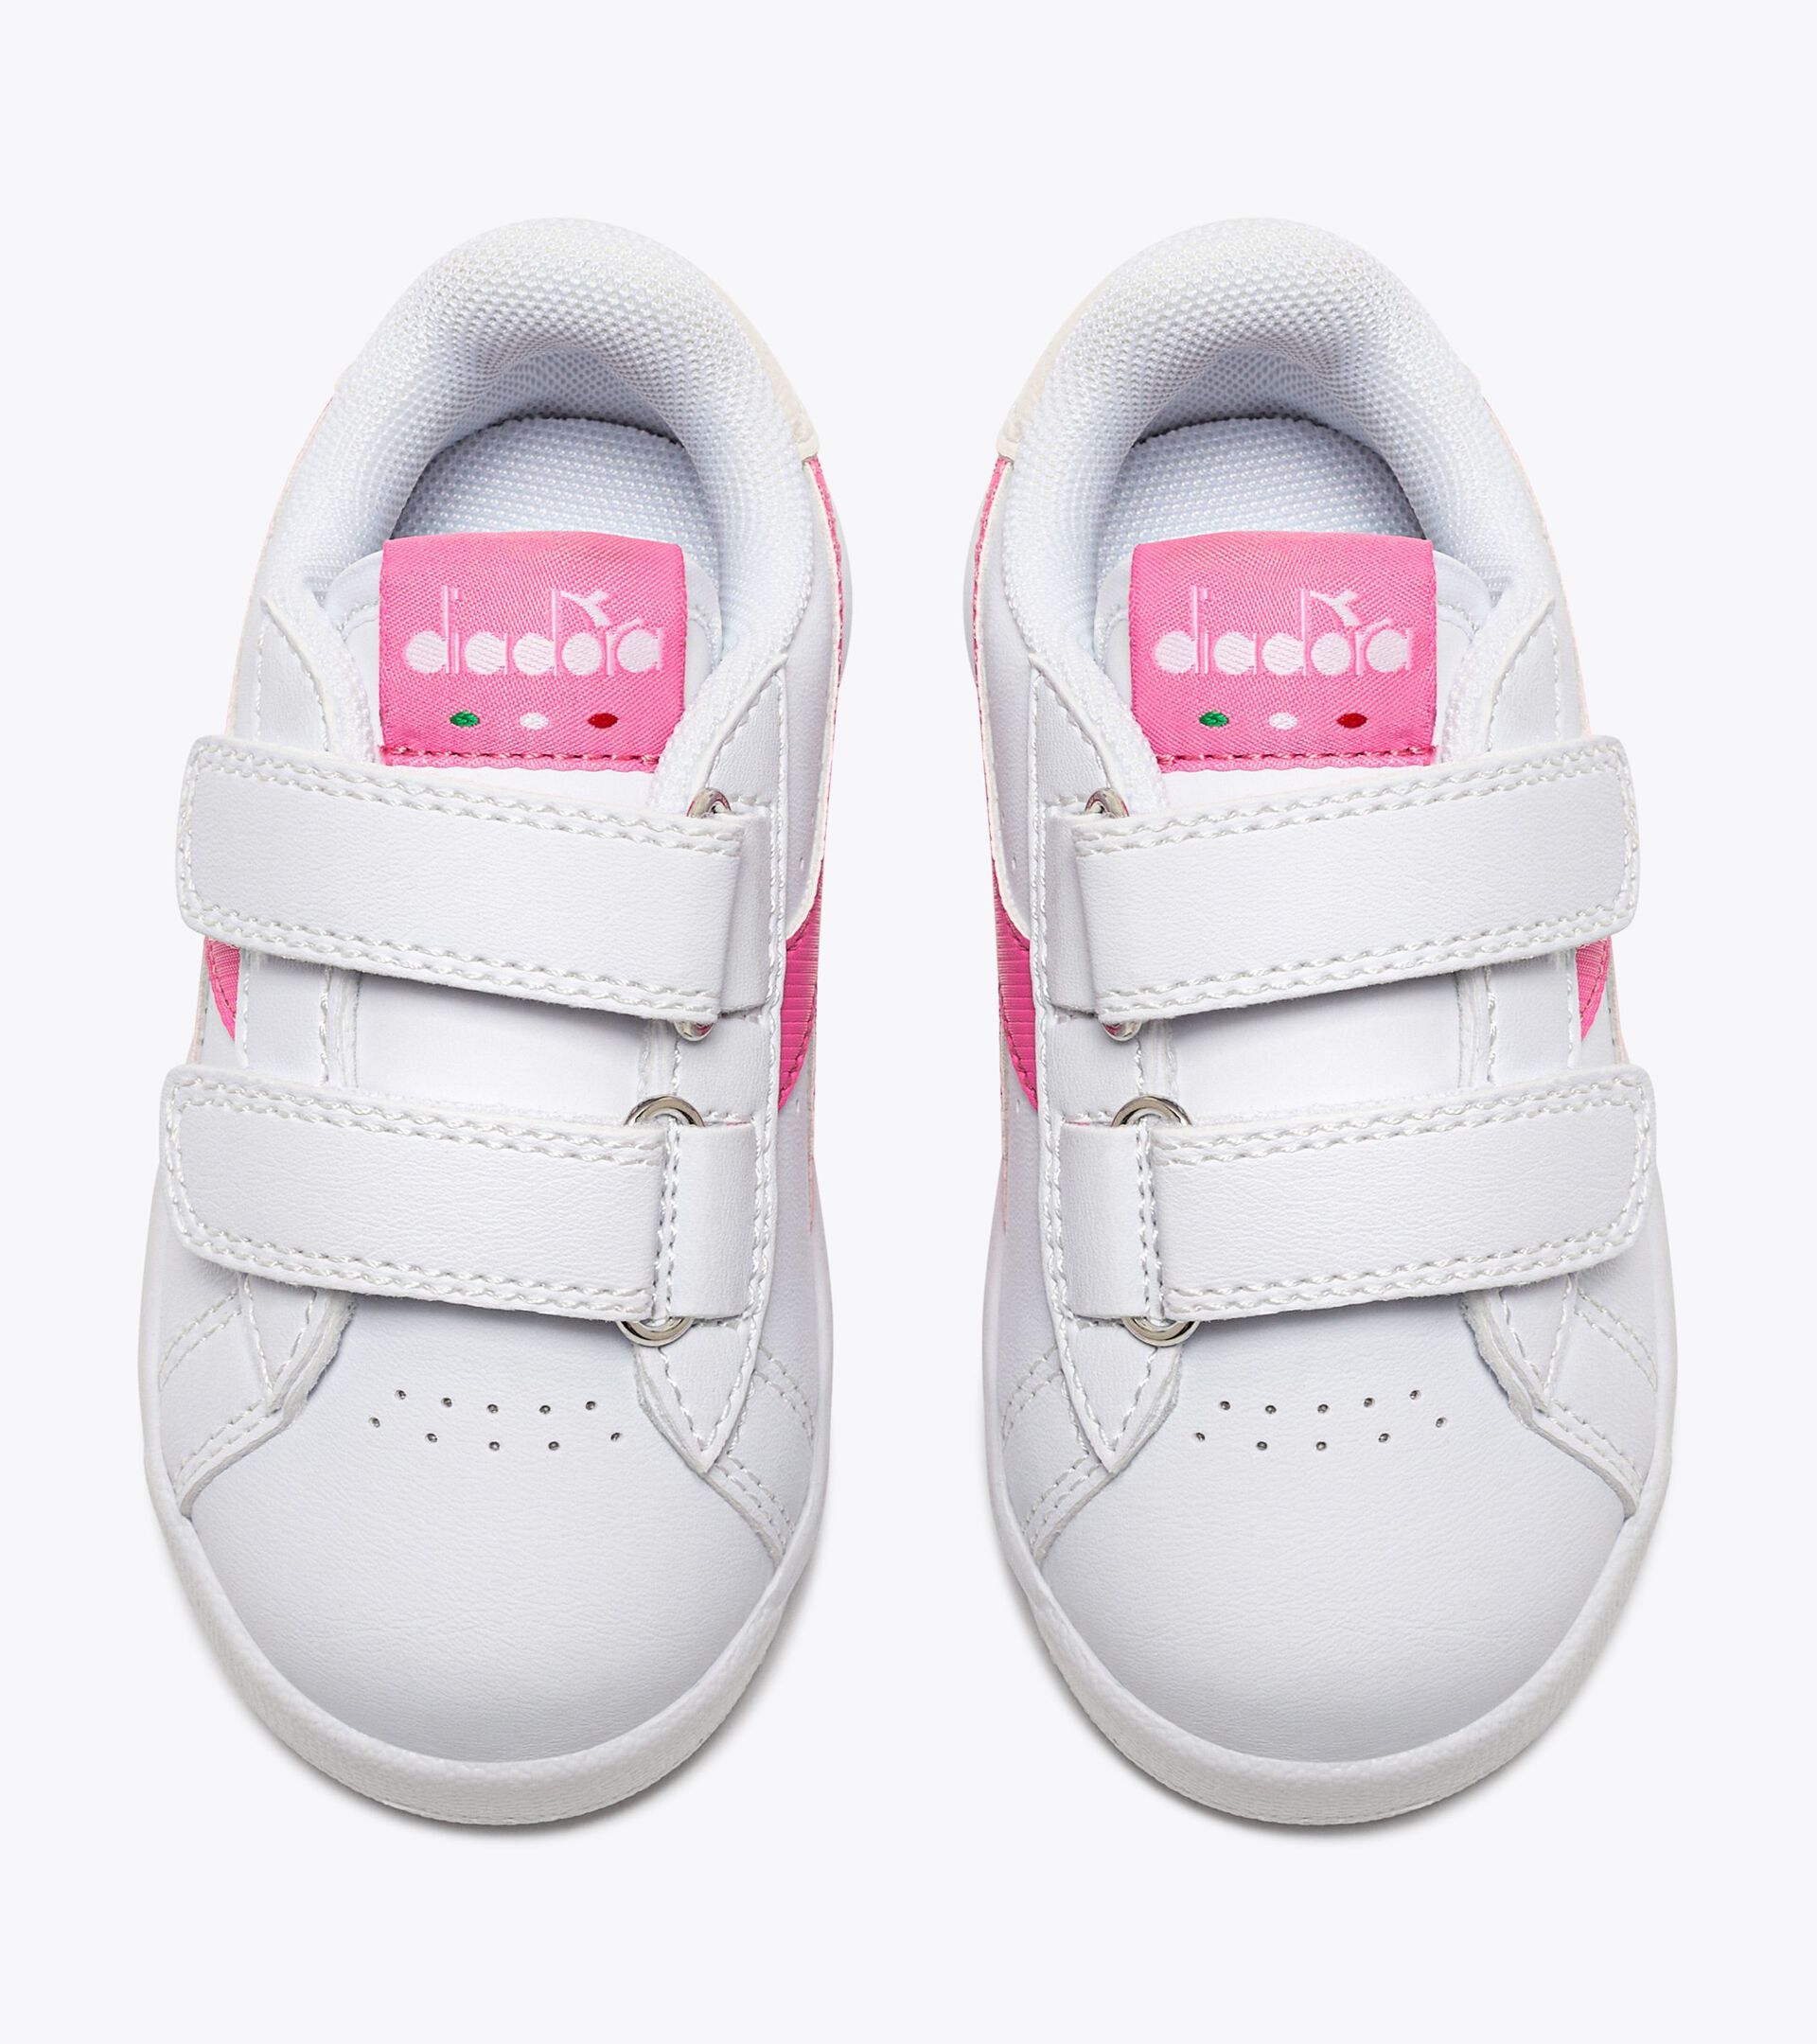 Sports shoes - Toddlers 1-4 years GAME P TD GIRL WHITE/PINK CARNATION - Diadora